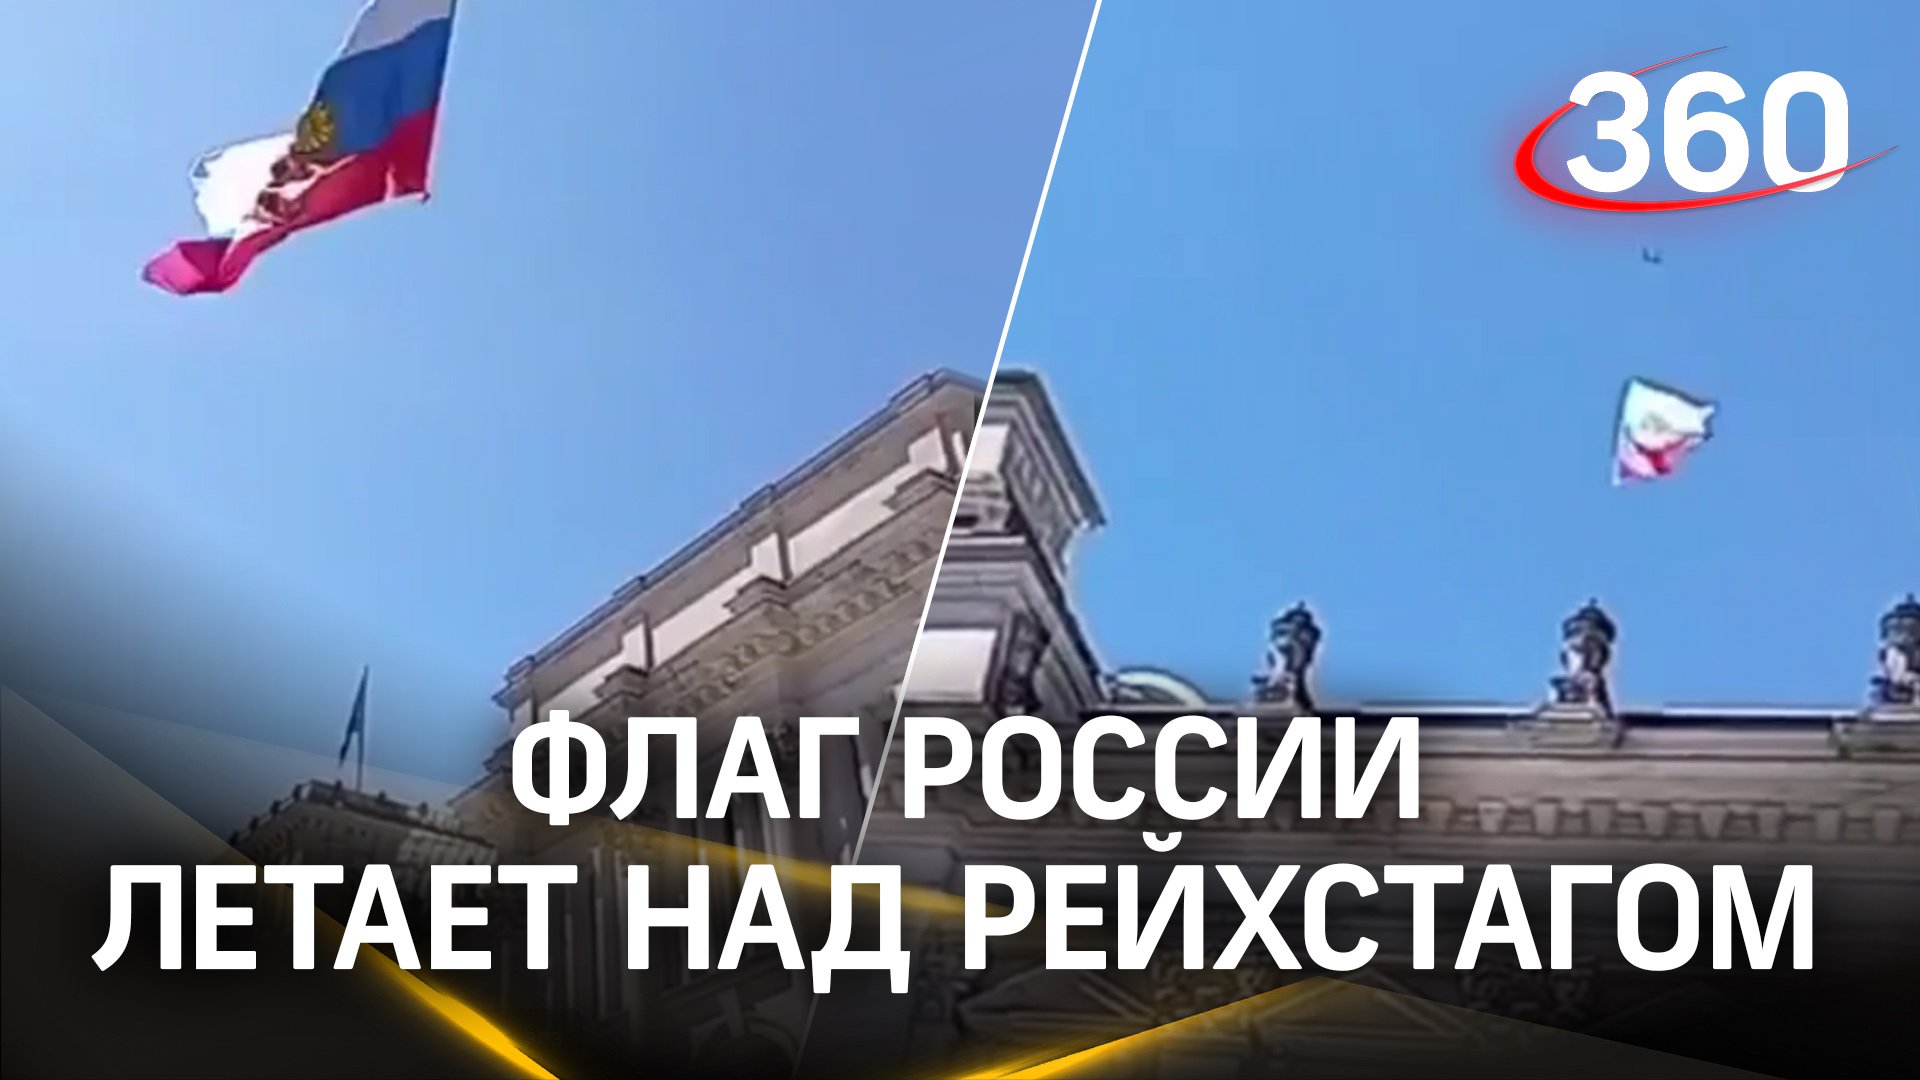 Дрон поднял российский флаг над Рейхстагом